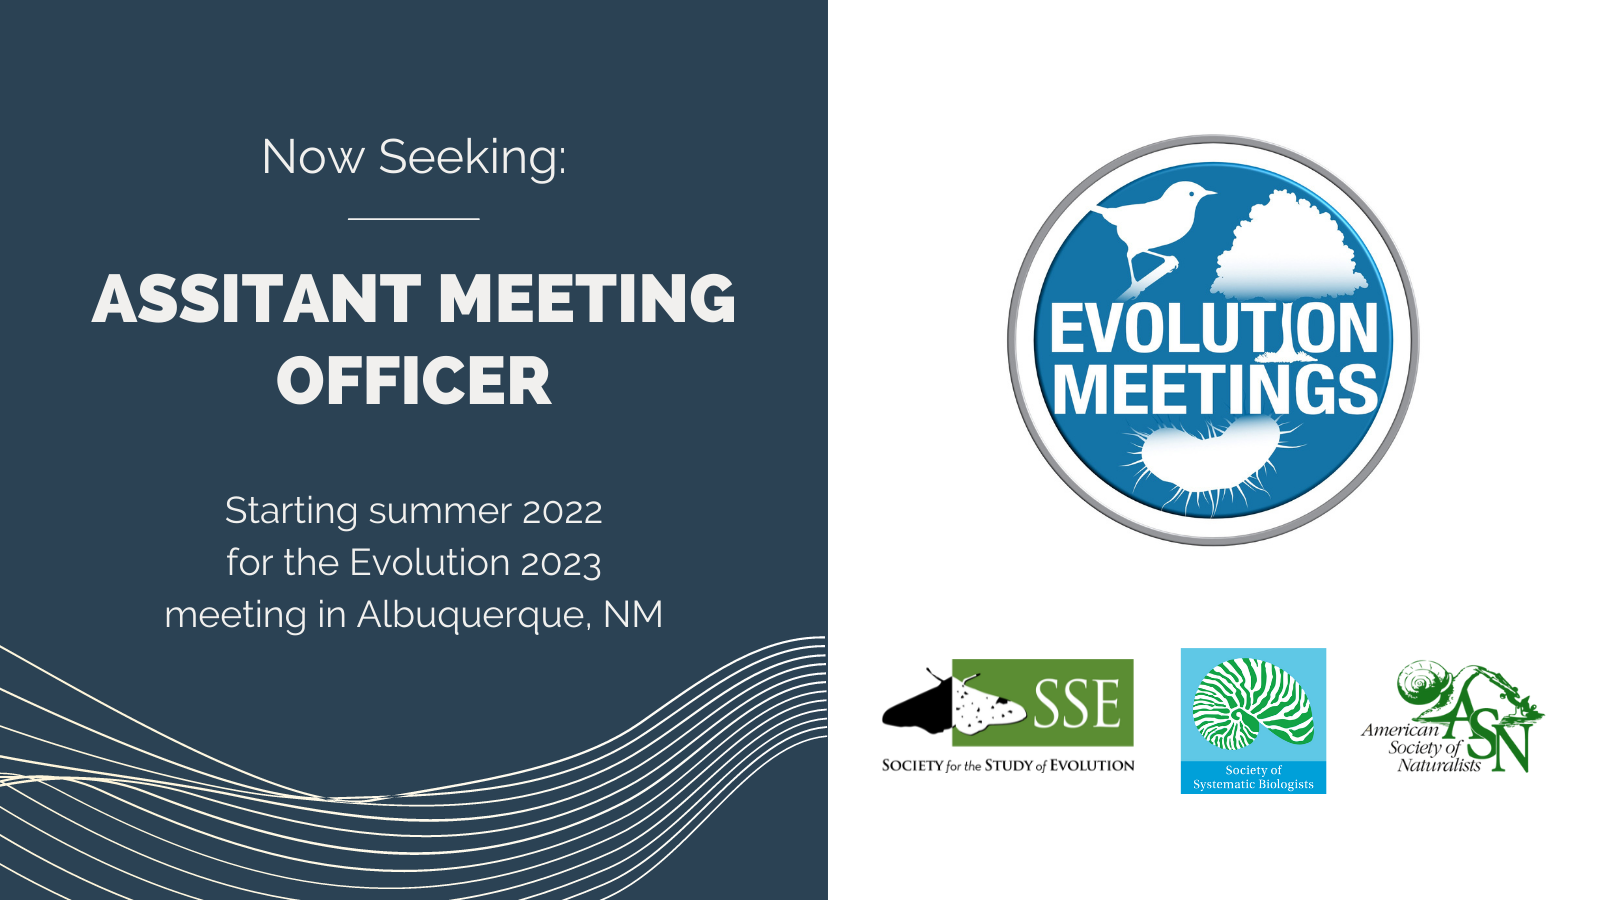 Evolution Meetings Seek Assistant Meeting Officer for 2023